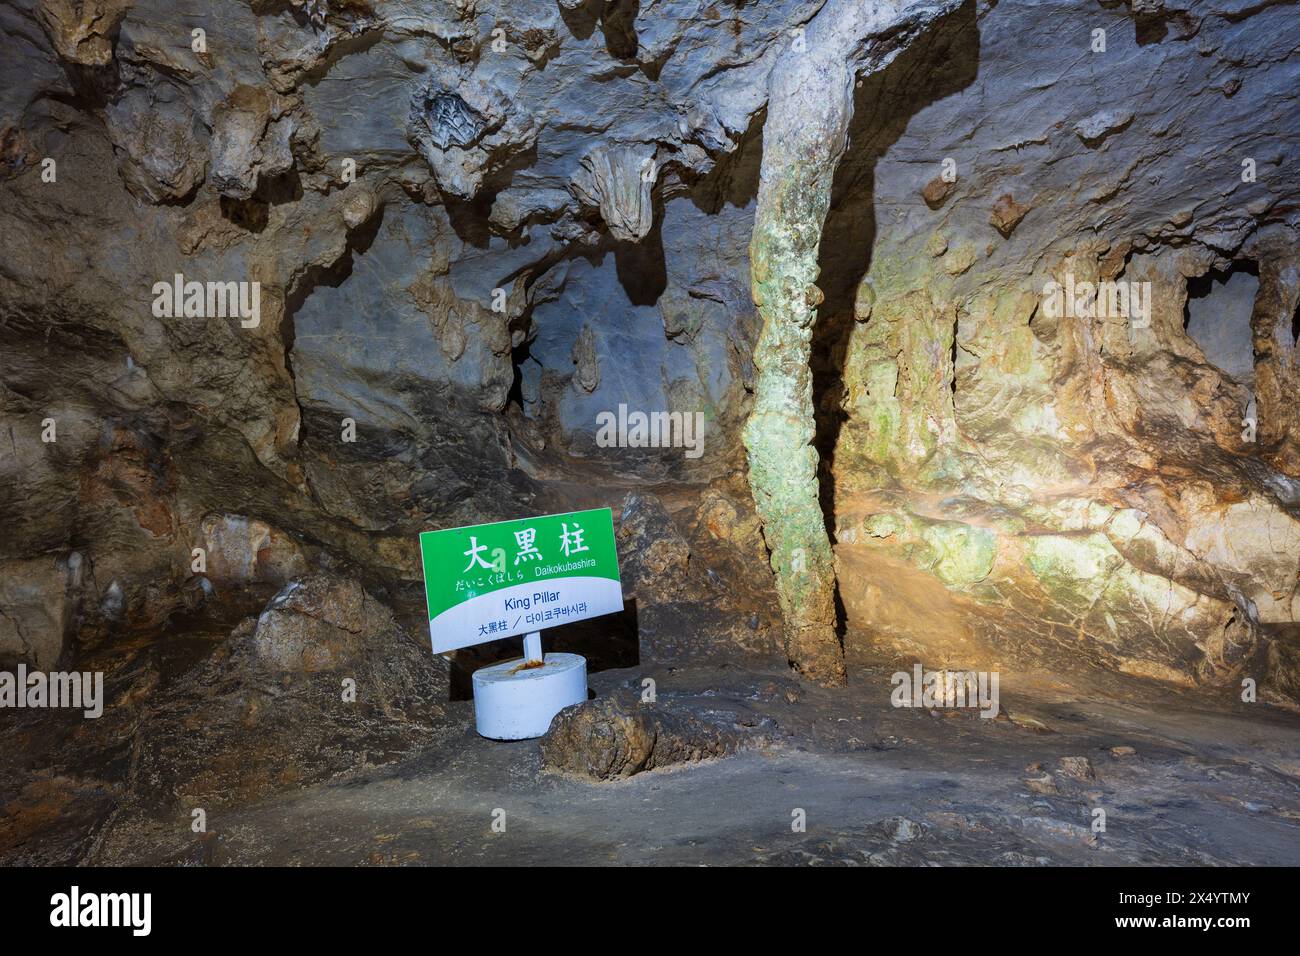 Stalattite chiamata "King Pillar" all'interno della grotta di Akiyoshido. Parco quasi nazionale di Akiyoshidai. Foto Stock